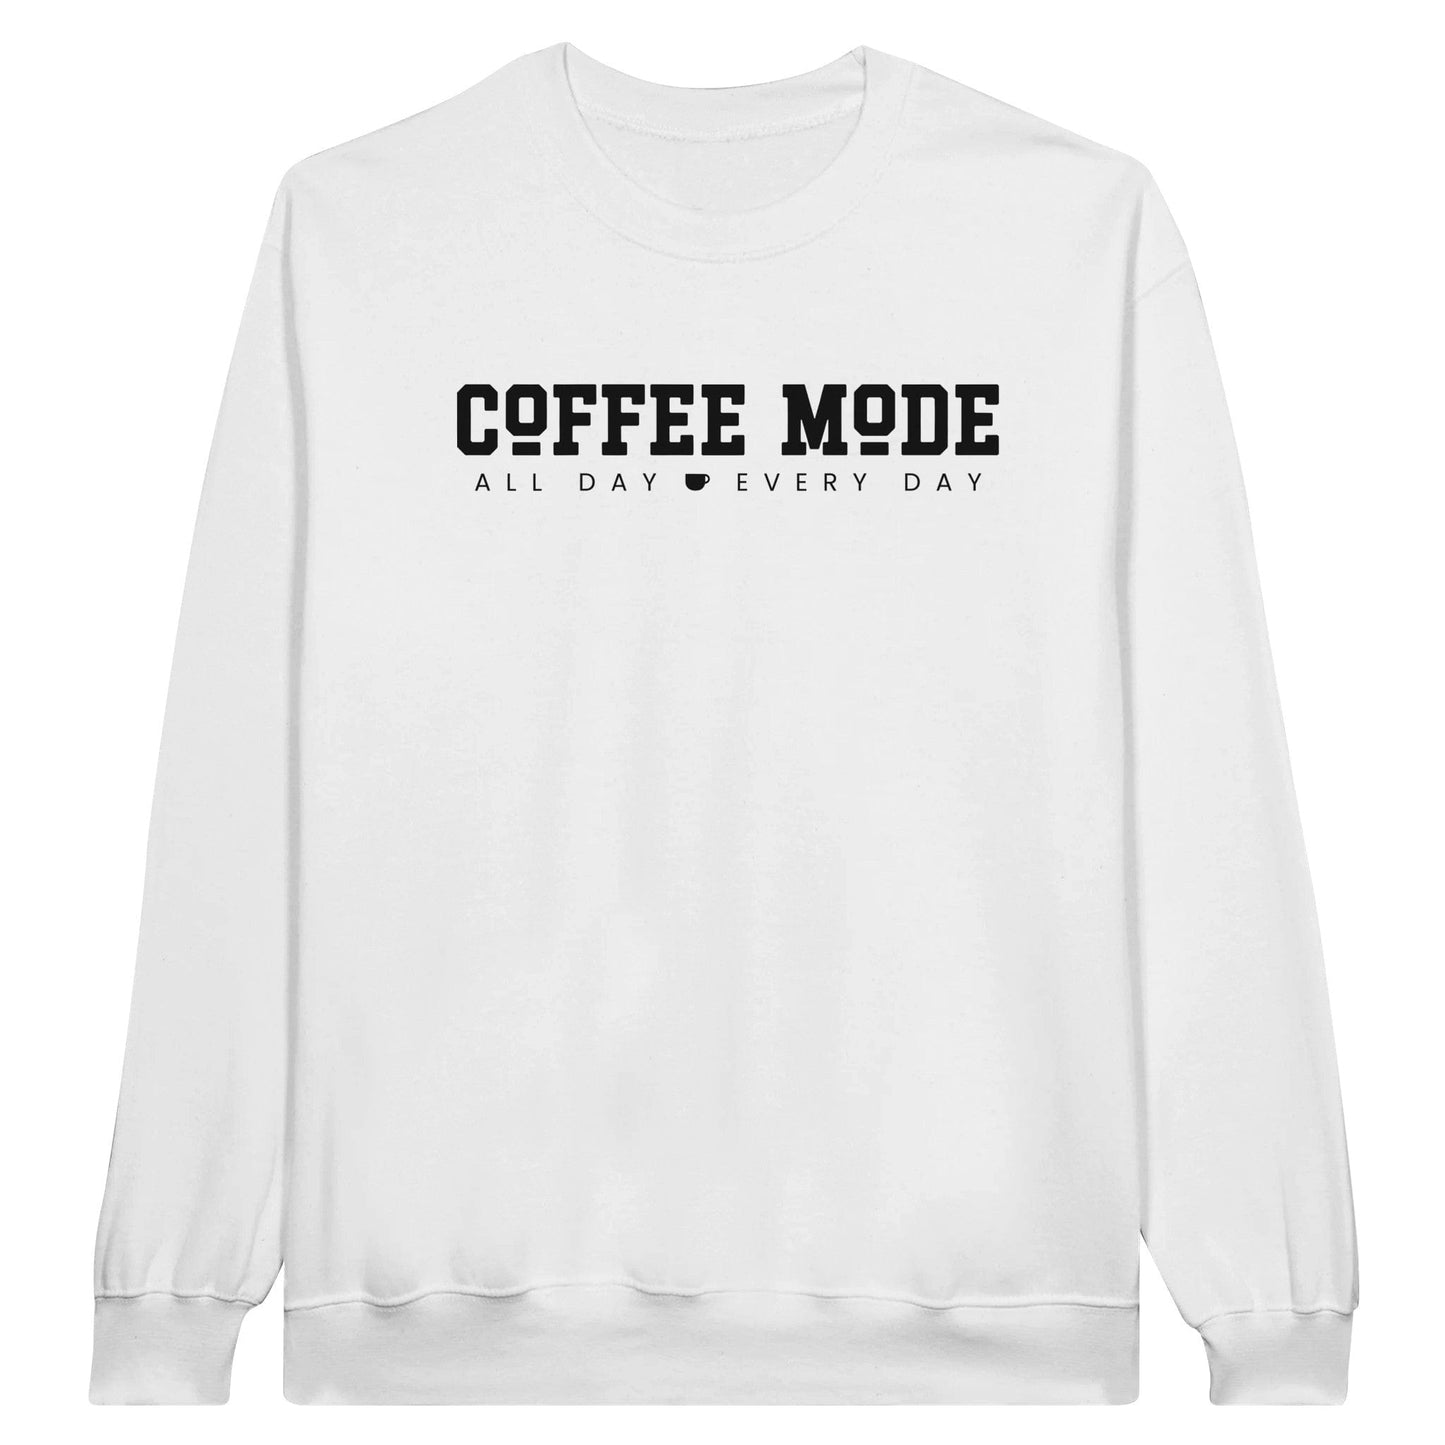 Good Bean Gifts "Coffee Mode" -Unisex Crewneck Sweatshirt White / M